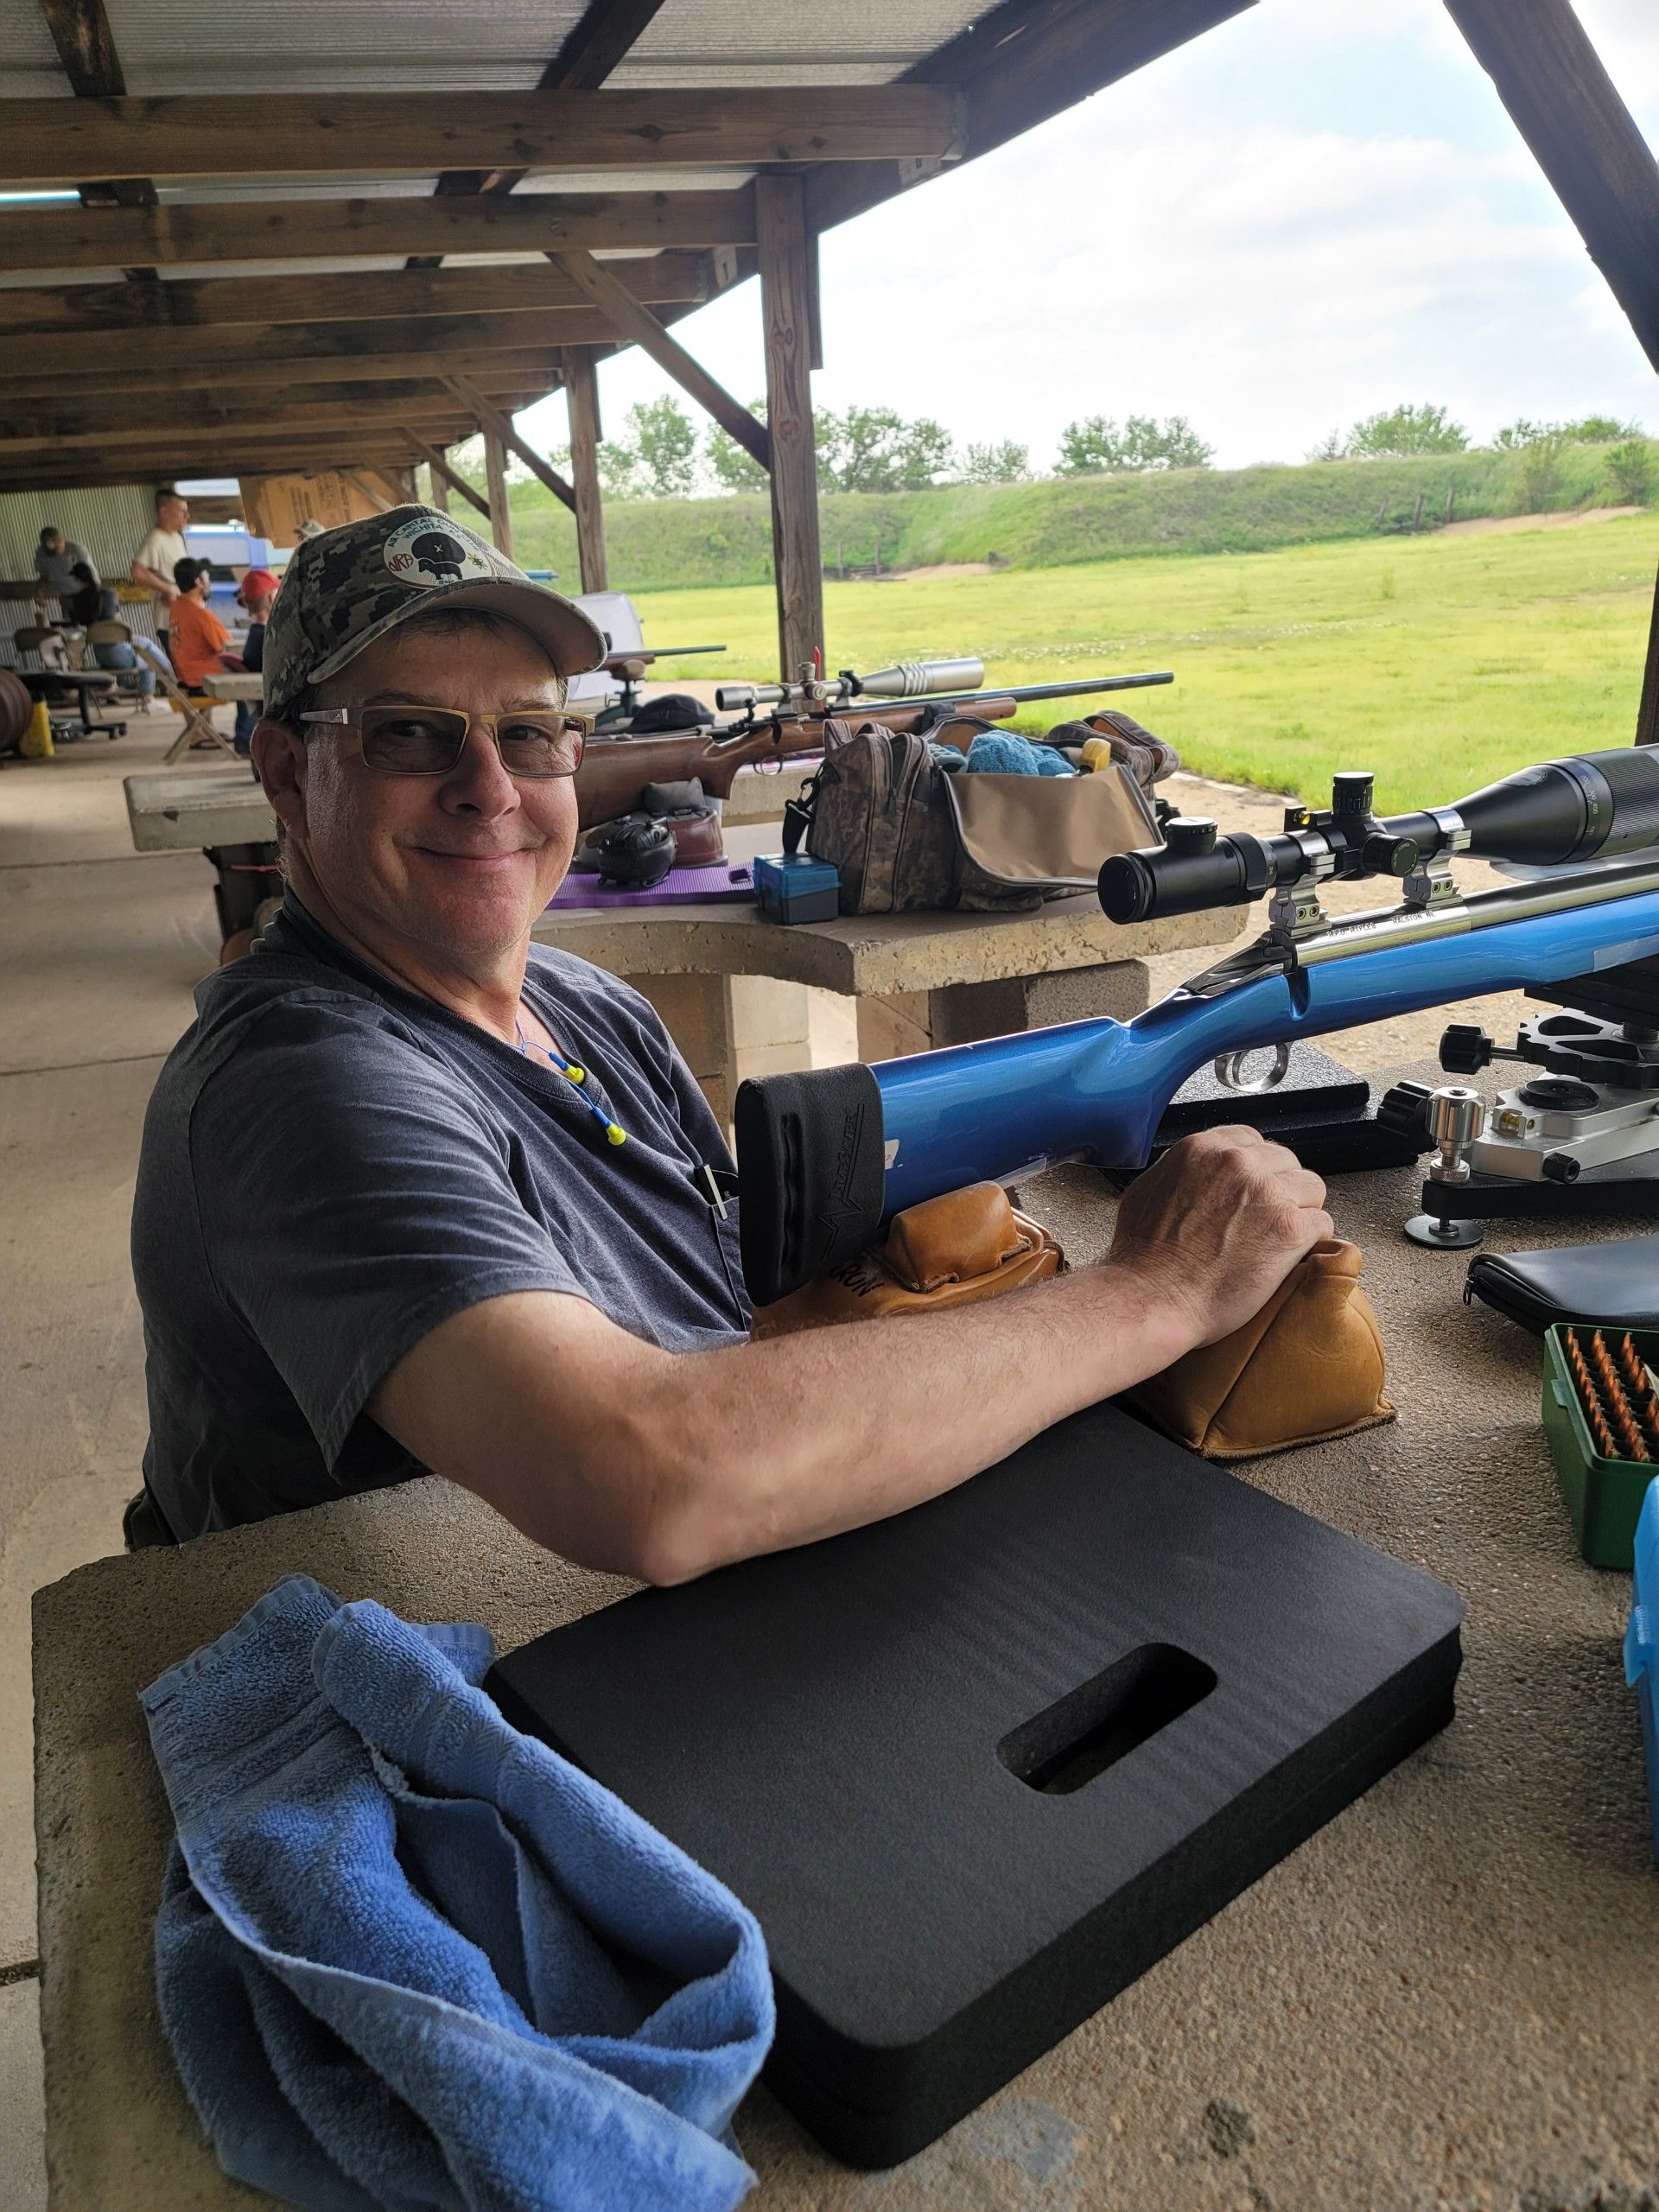 man in blue shirt and hat smiling at camera sitting at gun range table next to rifle